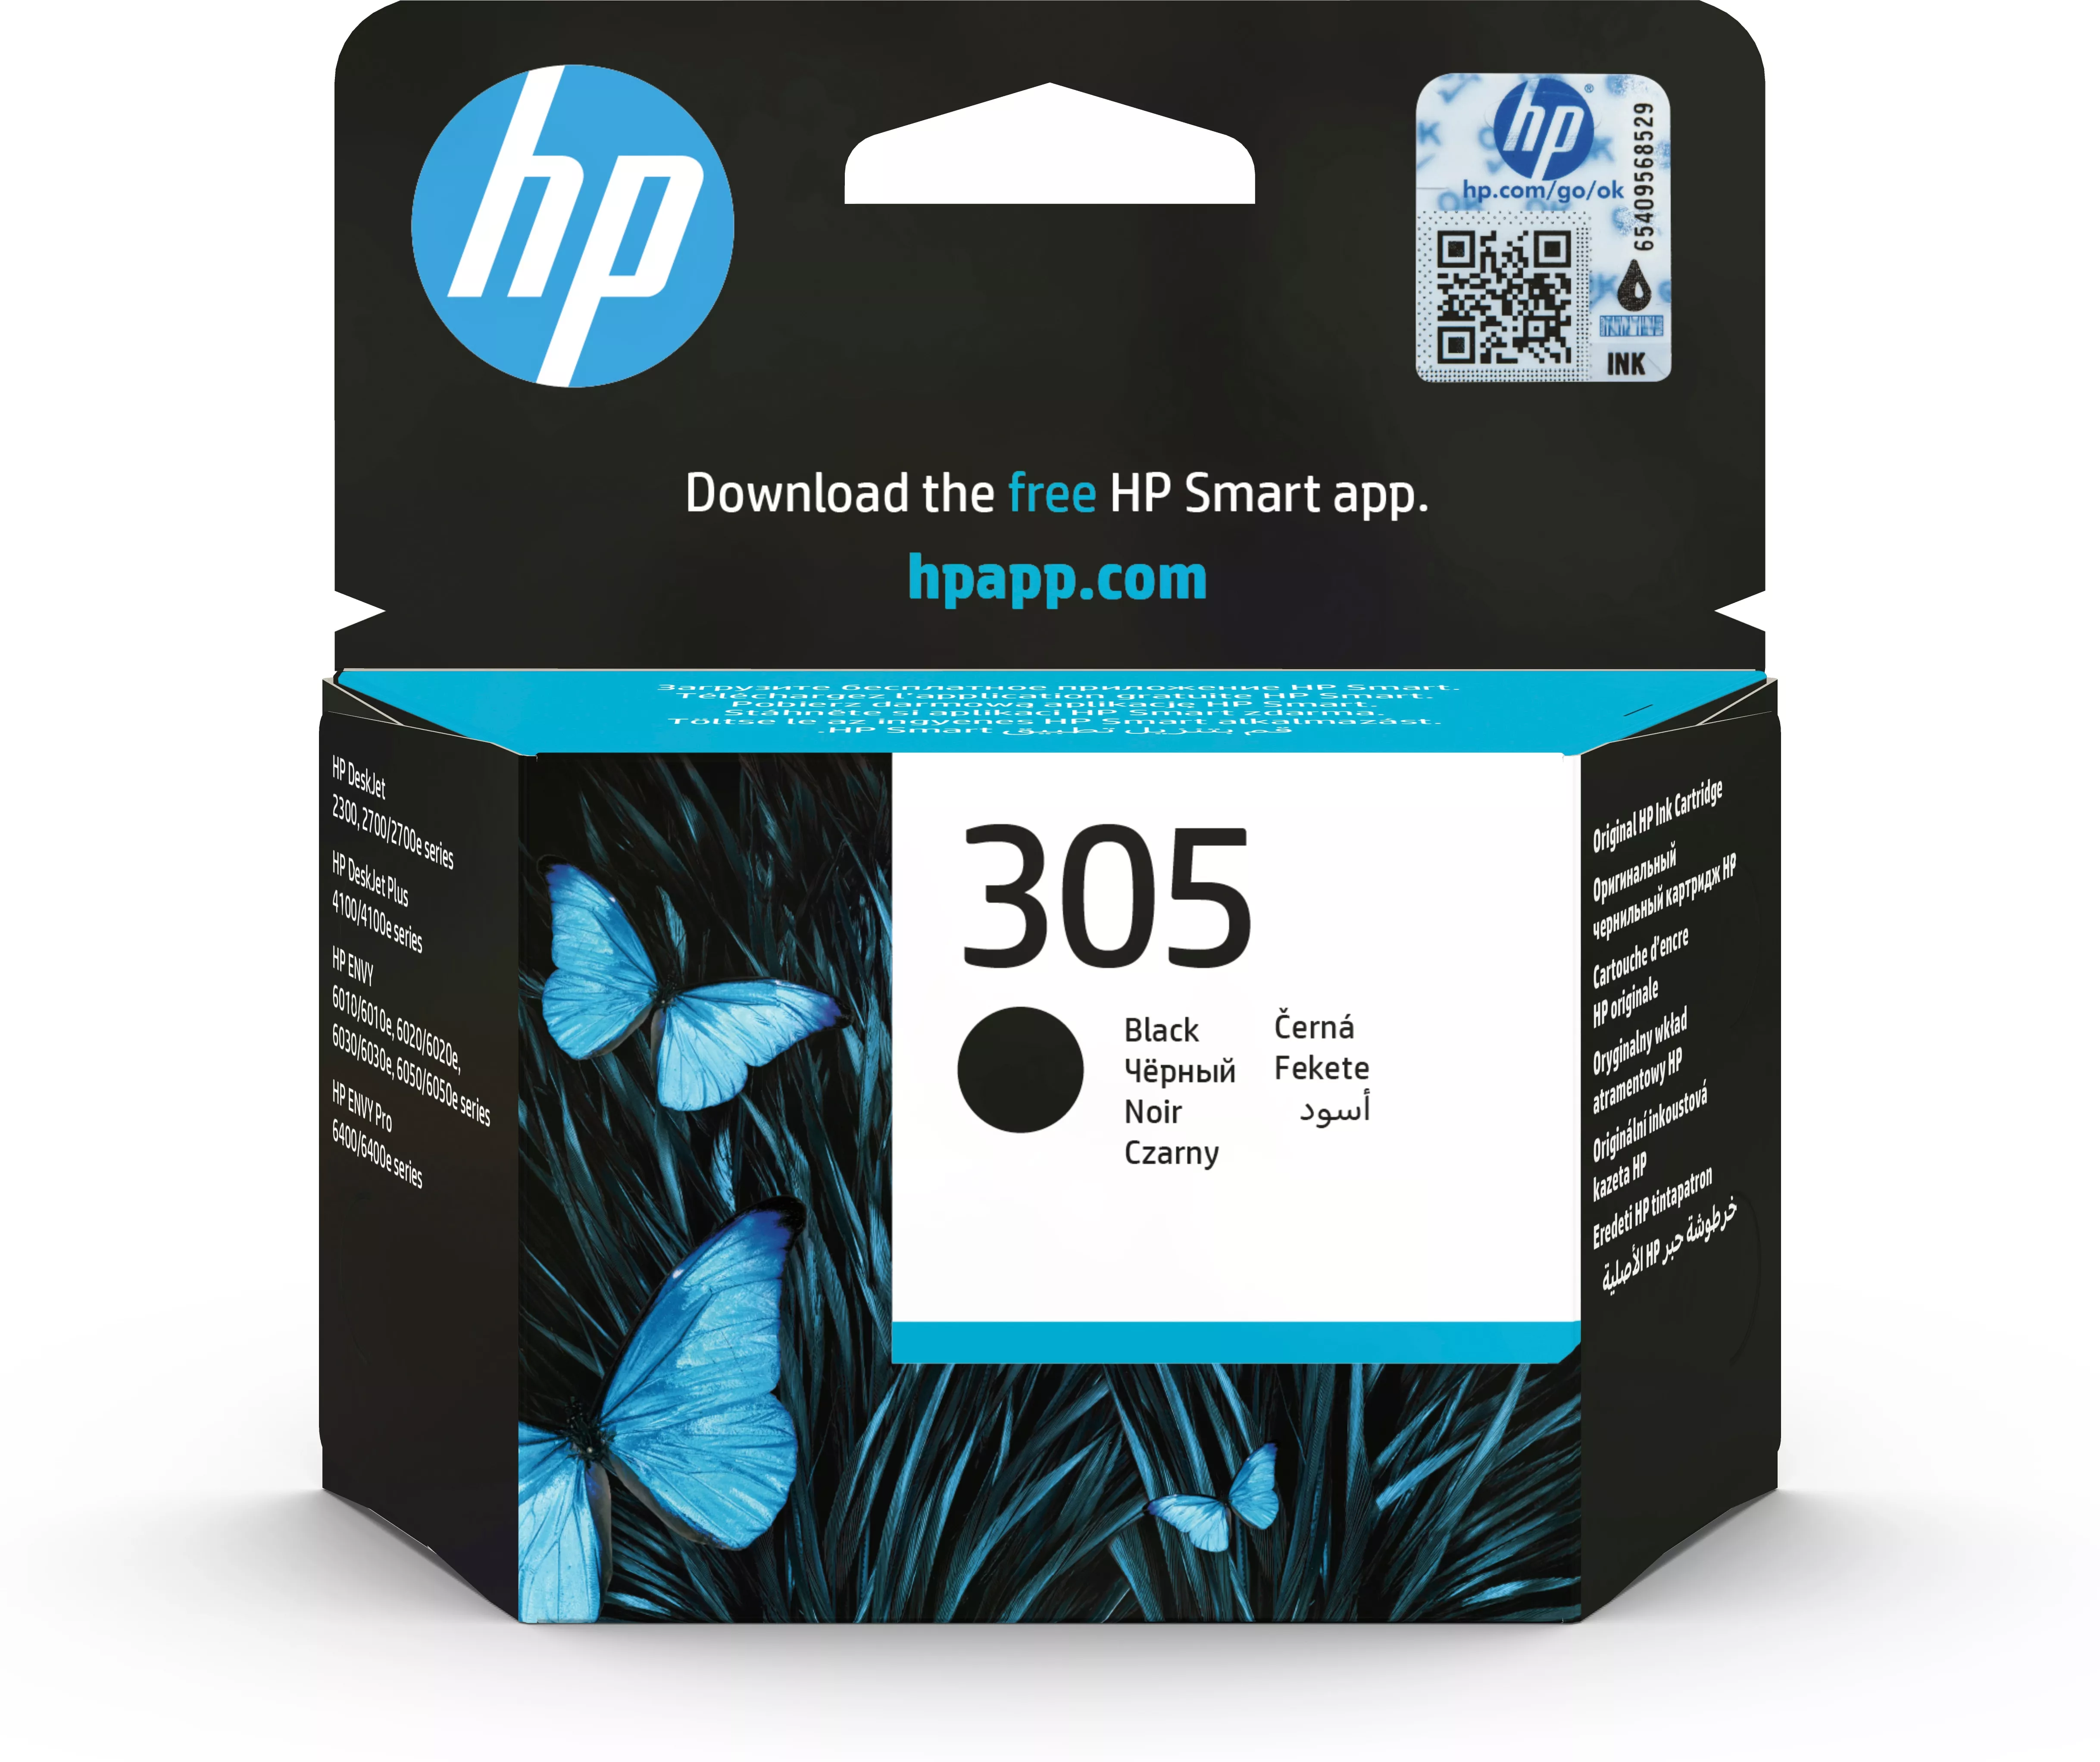 Achat HP 305 Black Original Ink Cartridge au meilleur prix